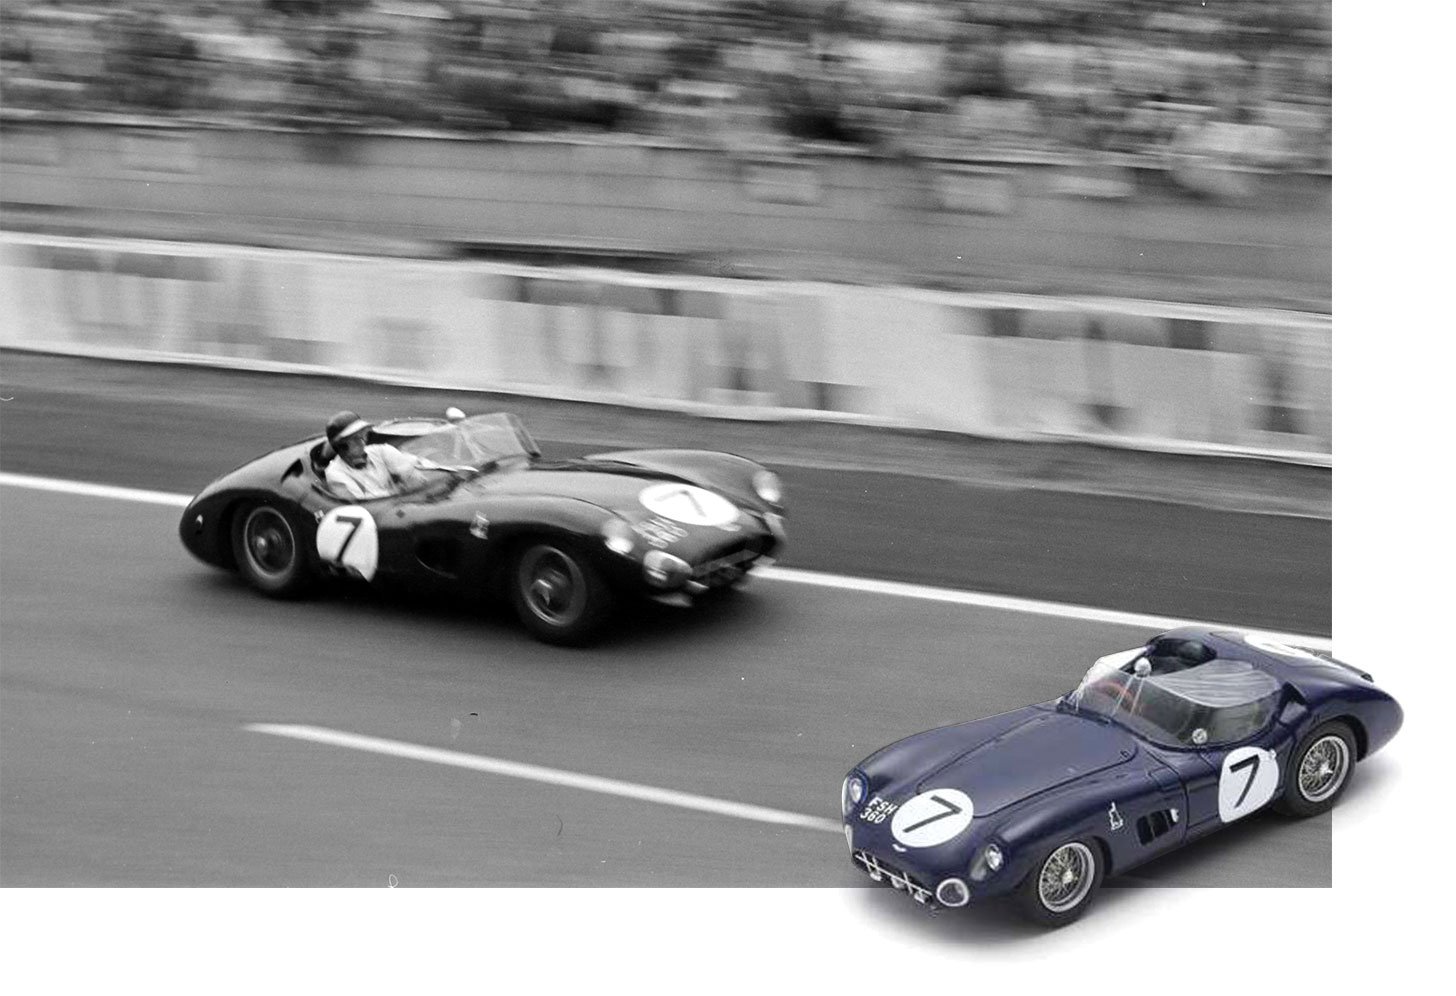 Spark 1:43 Clark and Salvadori 1960 Le Mans Aston Martin DBR1 diecast model car review